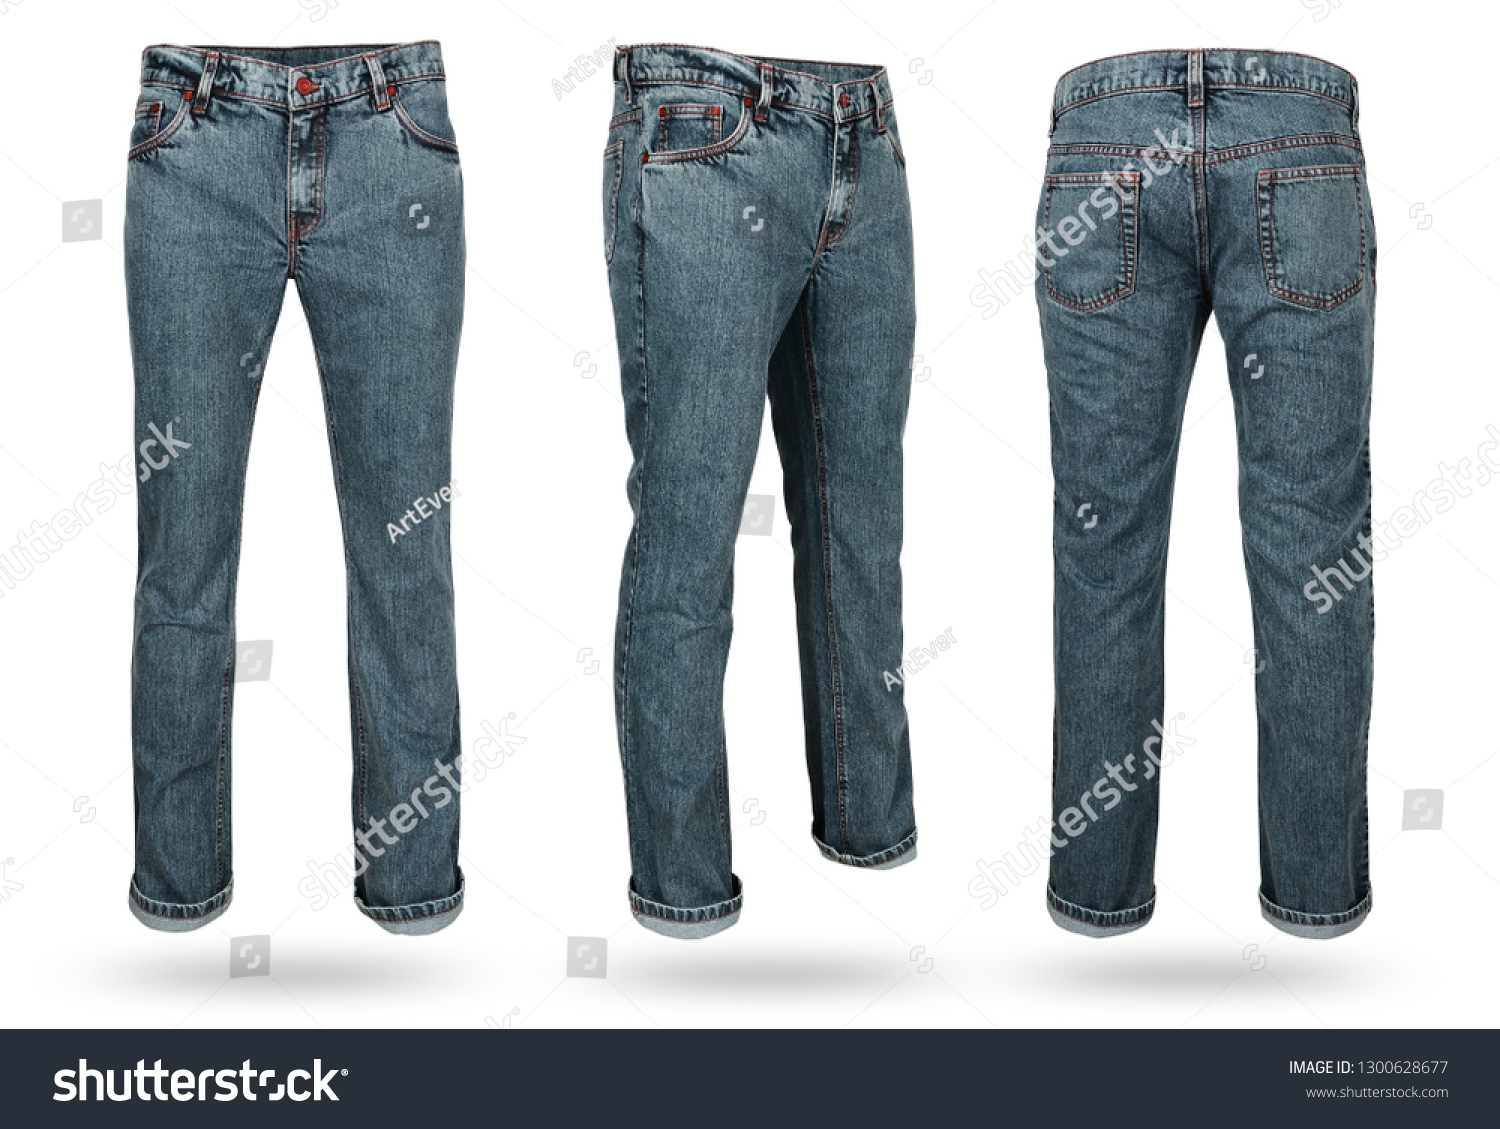 Blue Denim Jeans Isolated On White Stock Photo 1300628677 | Shutterstock